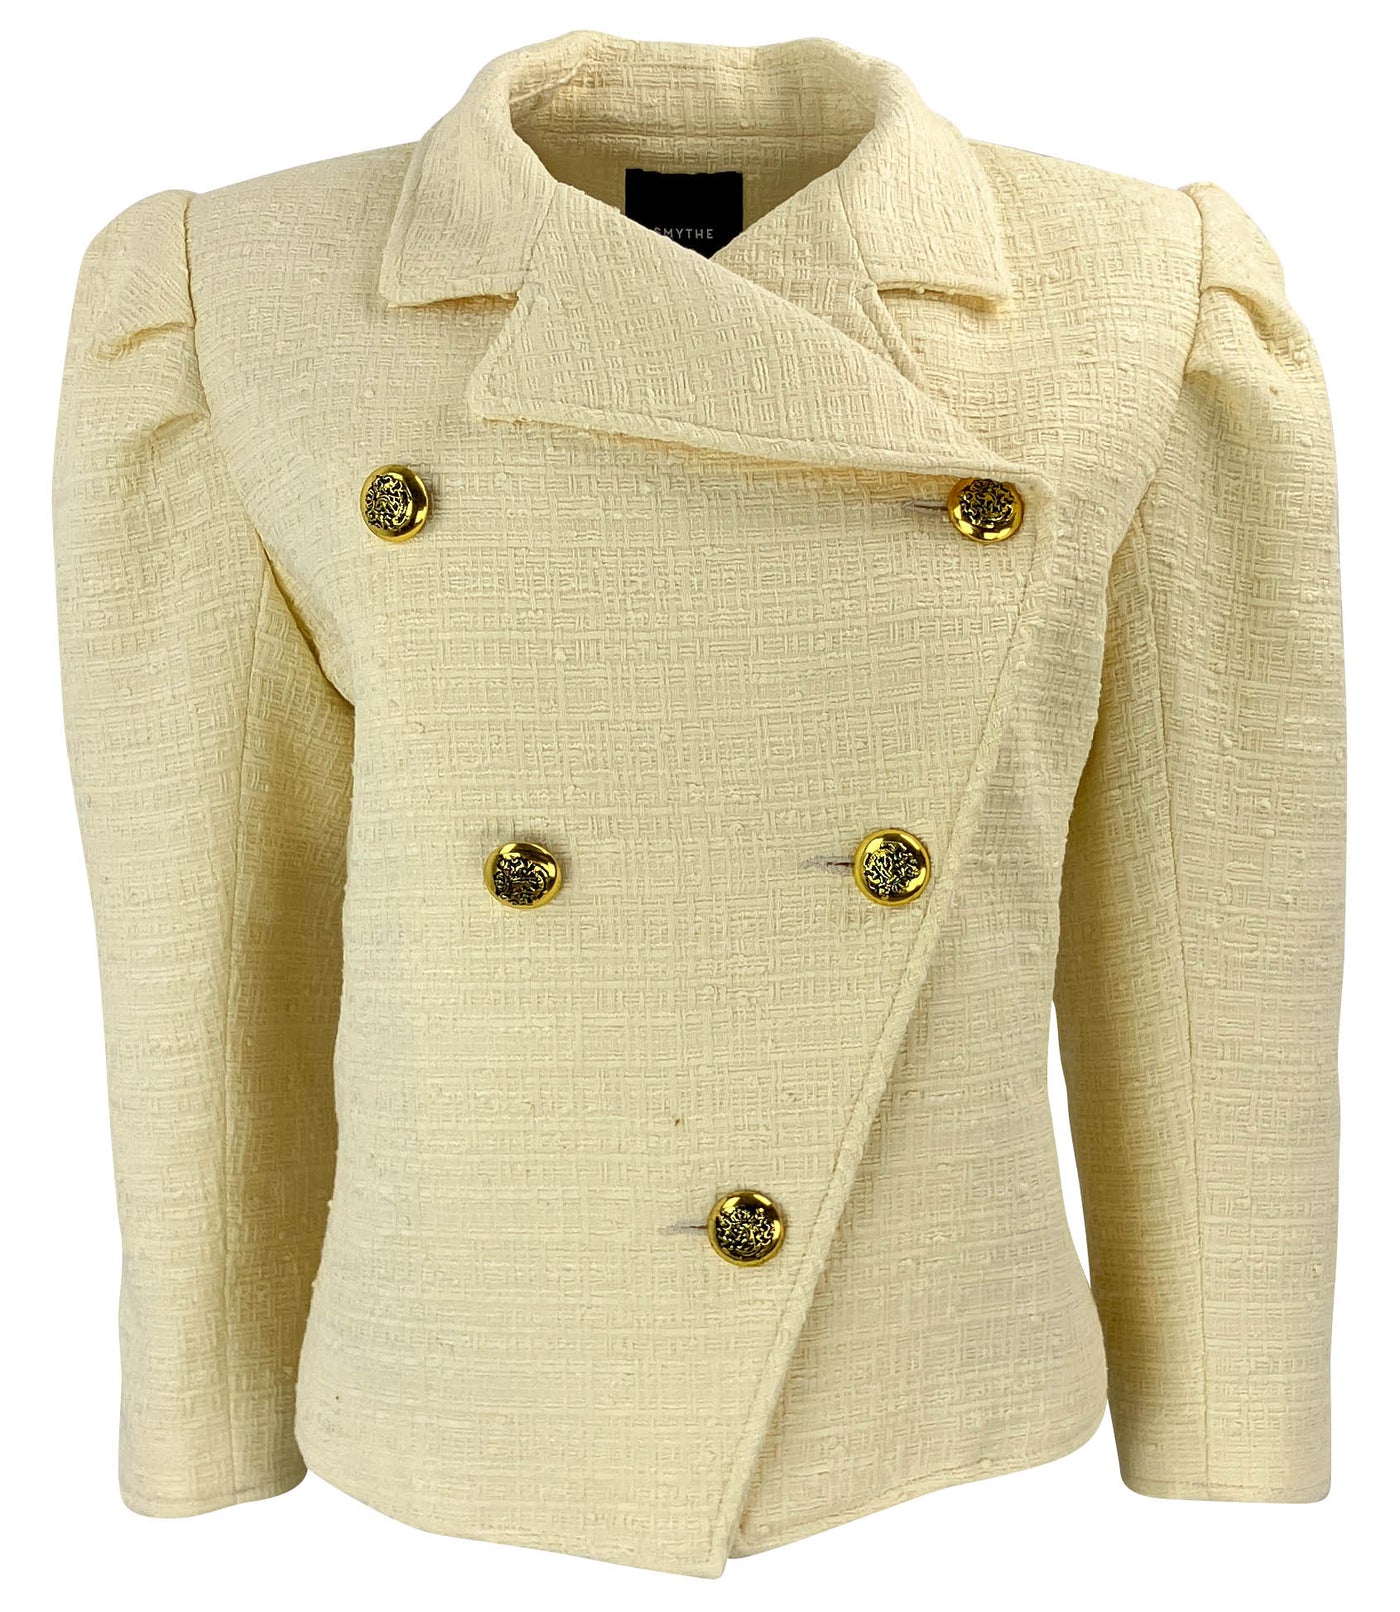 Smythe Box Pleat Jacket in Crema Tweed - Discounts on Smythe at UAL